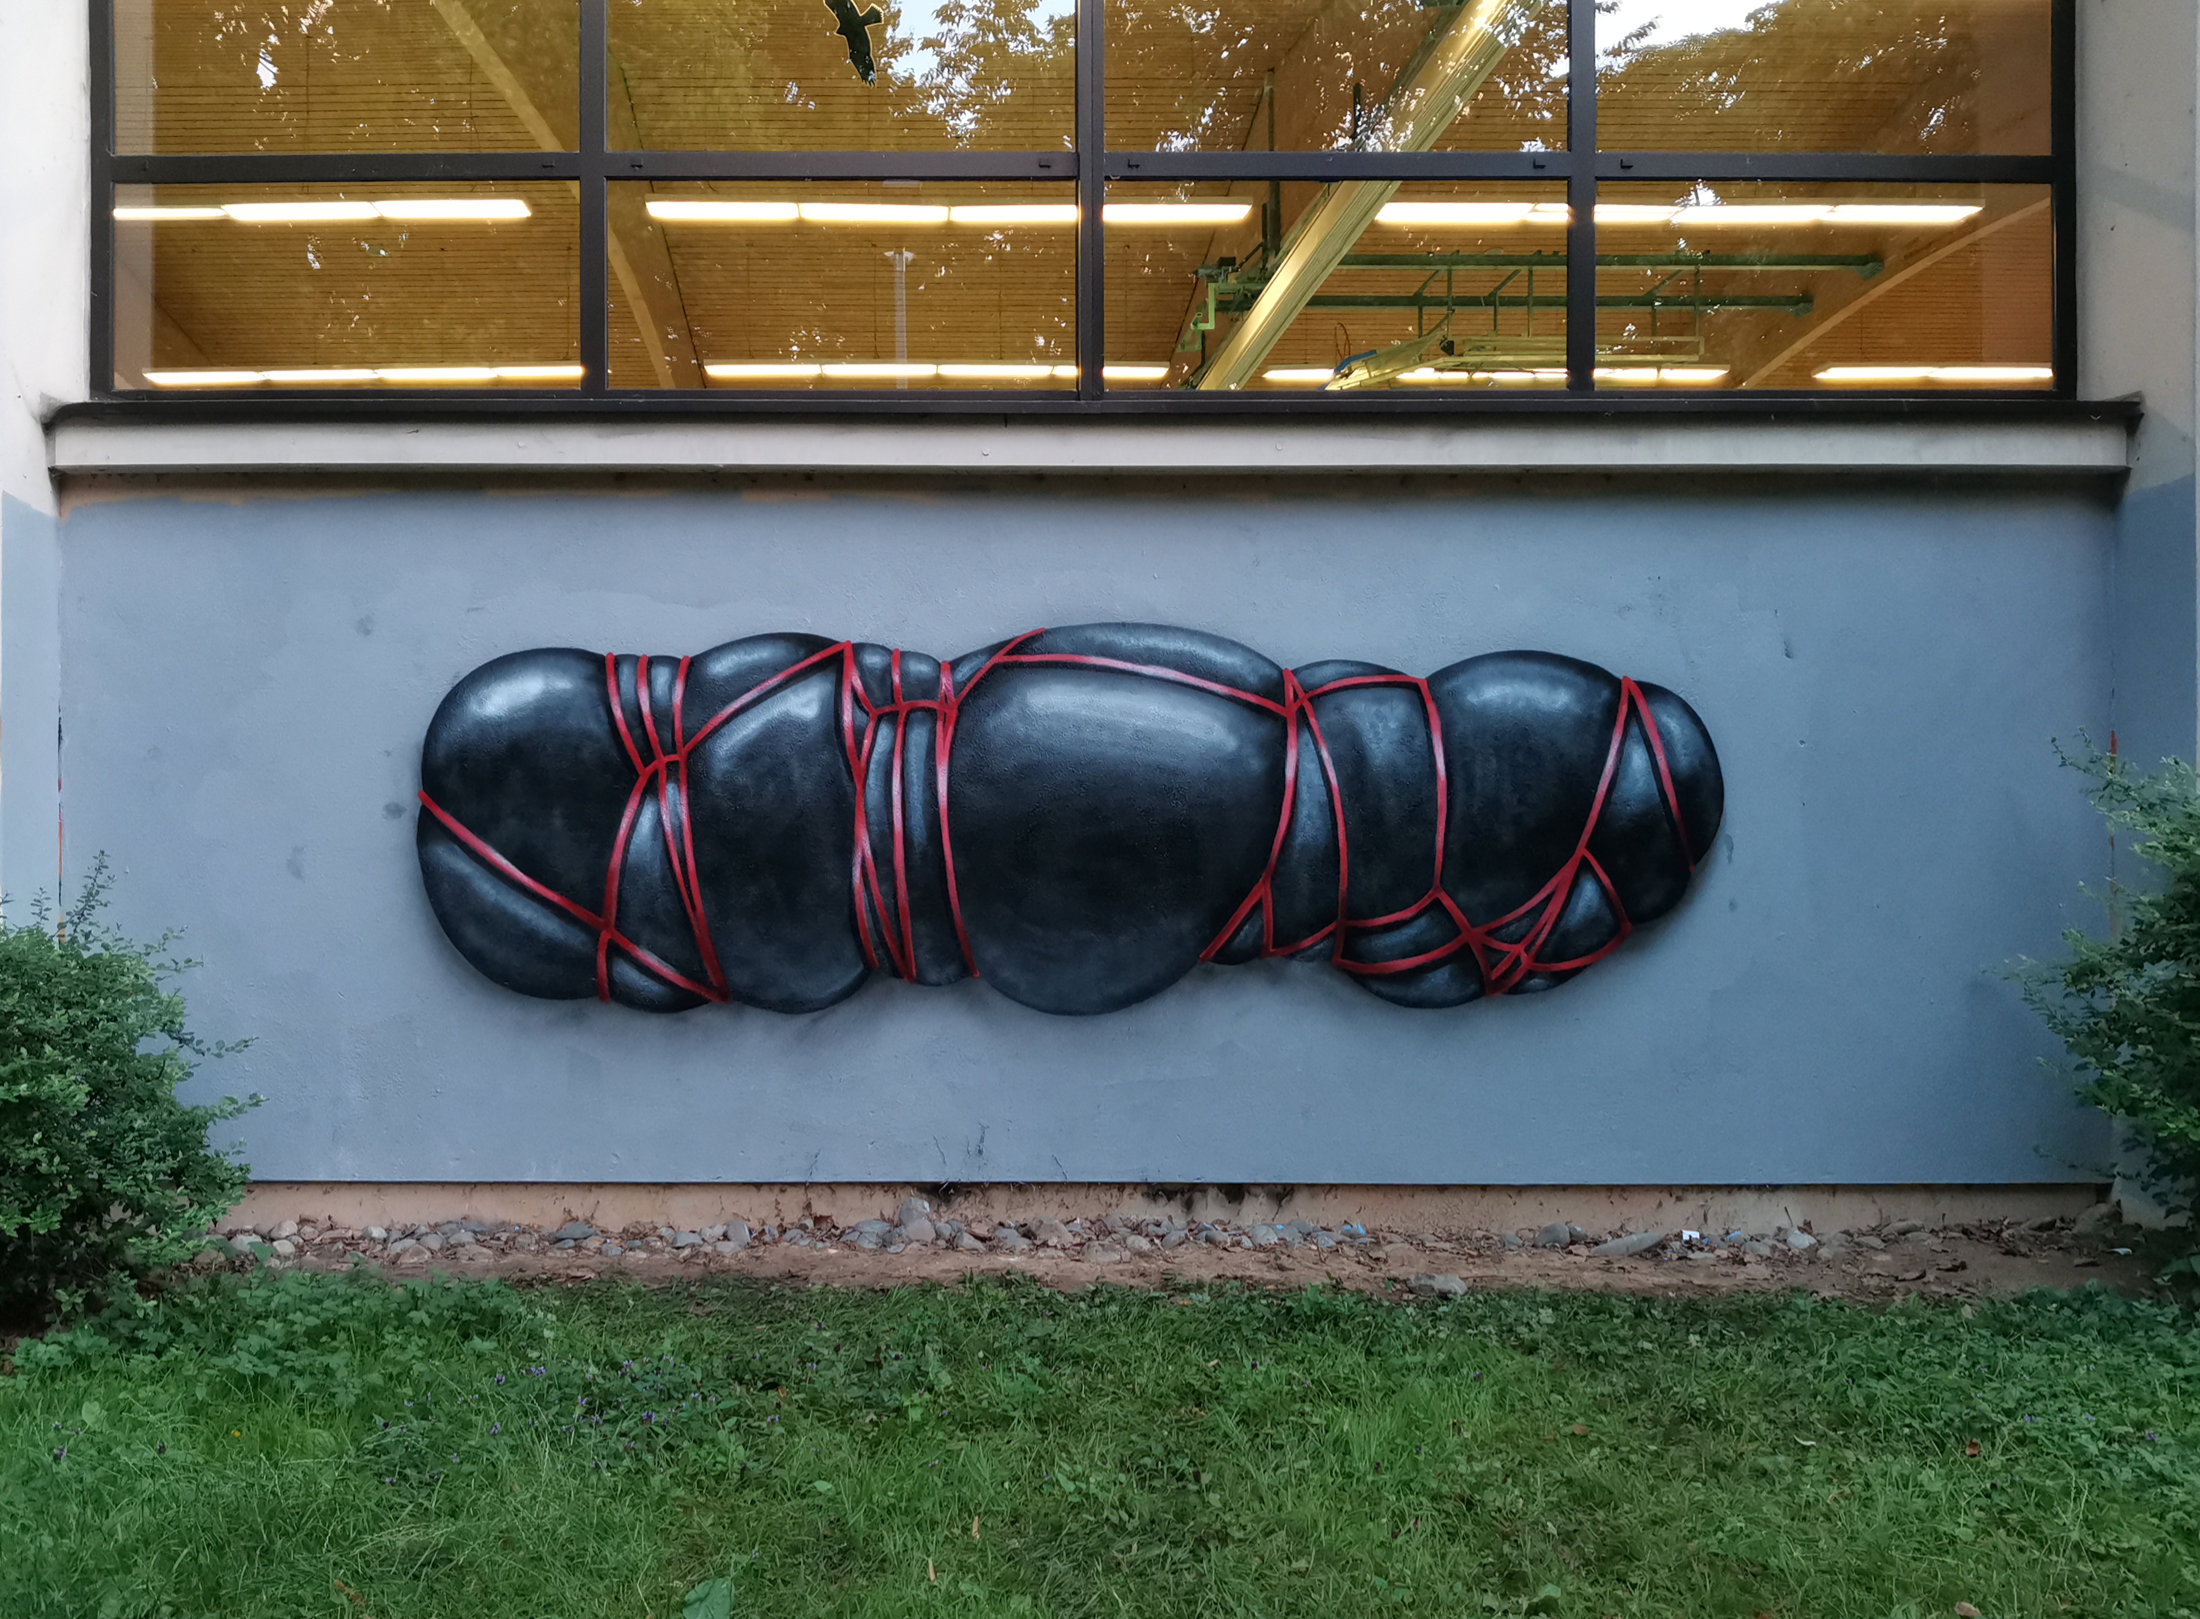 Abstract graffiti bondage artwork